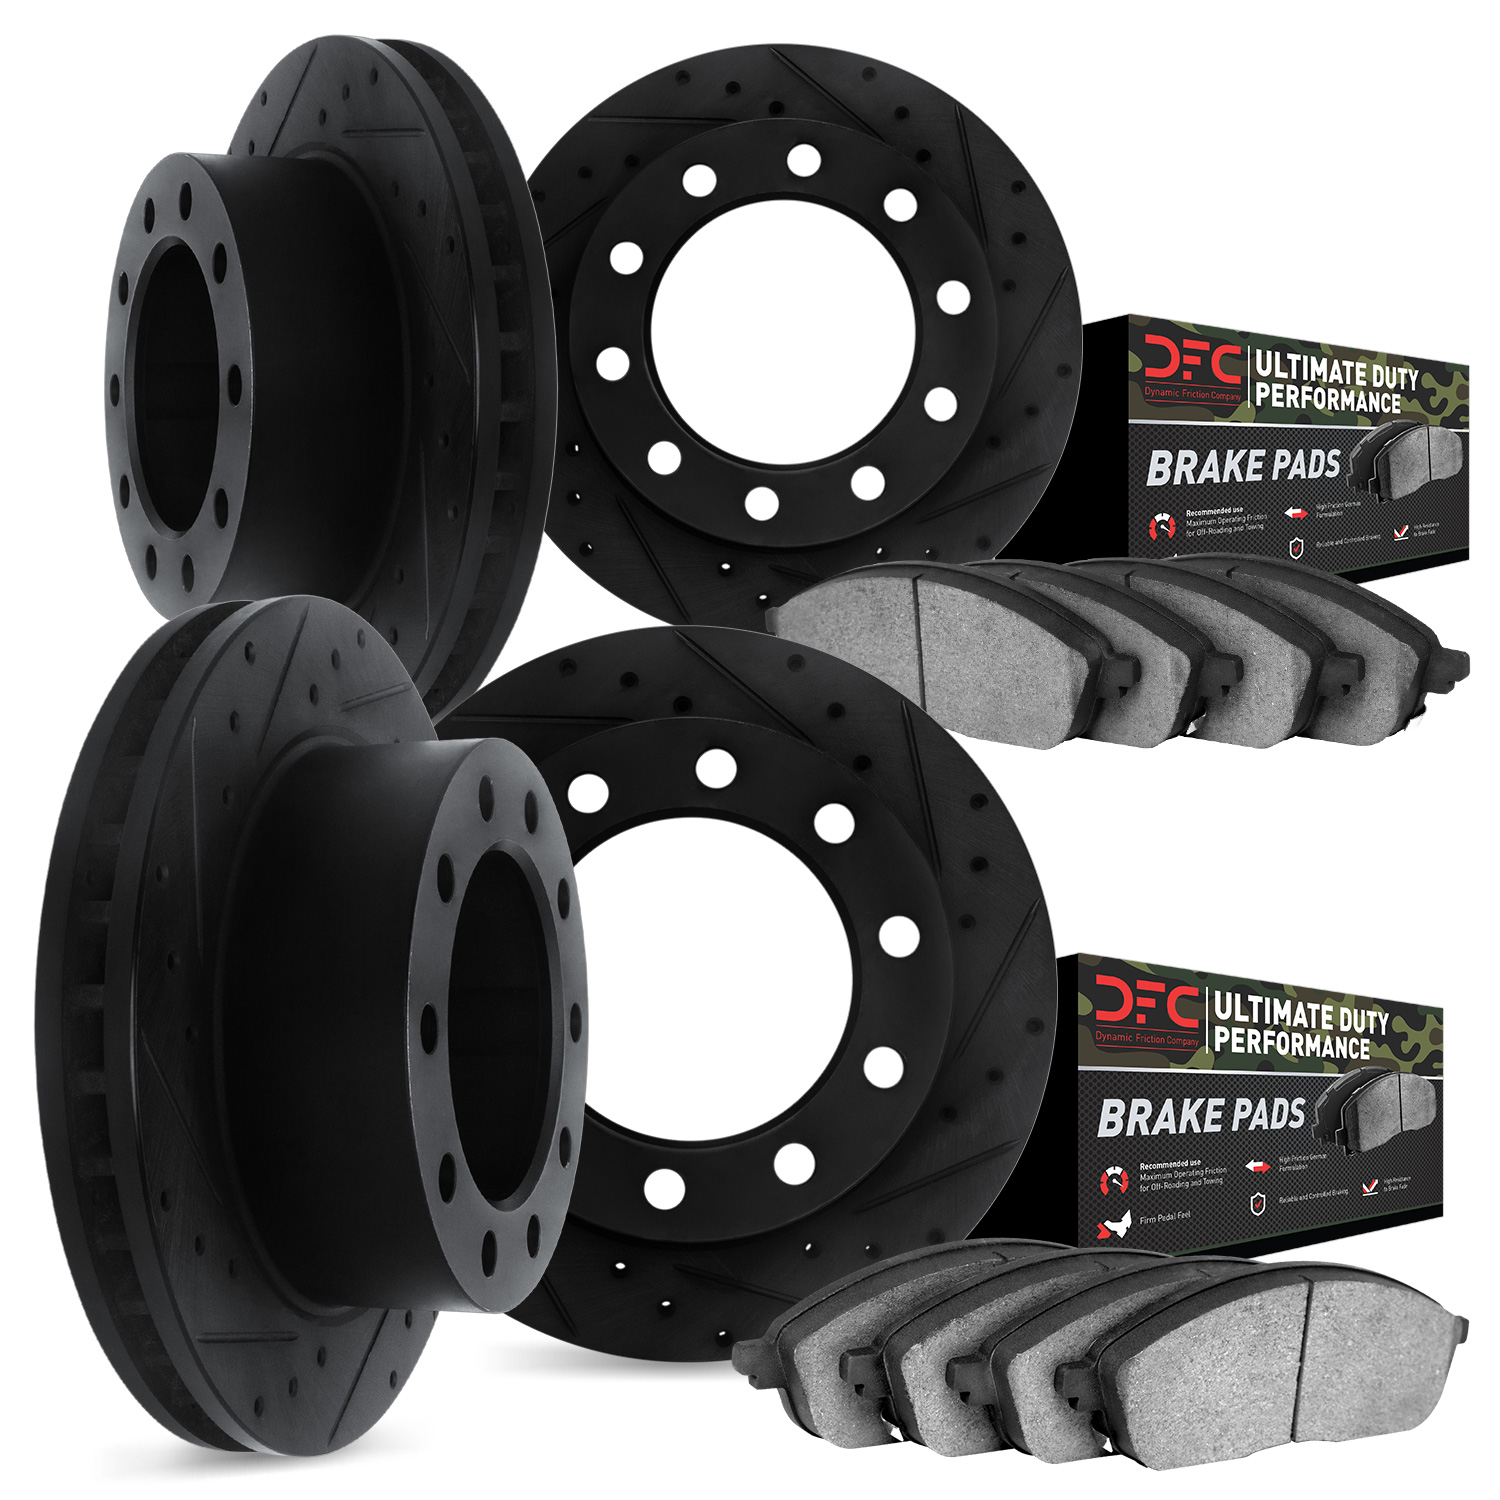 8404-40008 Drilled/Slotted Brake Rotors with Ultimate-Duty Brake Pads Kit [Black], 2005-2017 Multiple Makes/Models, Position: Fr